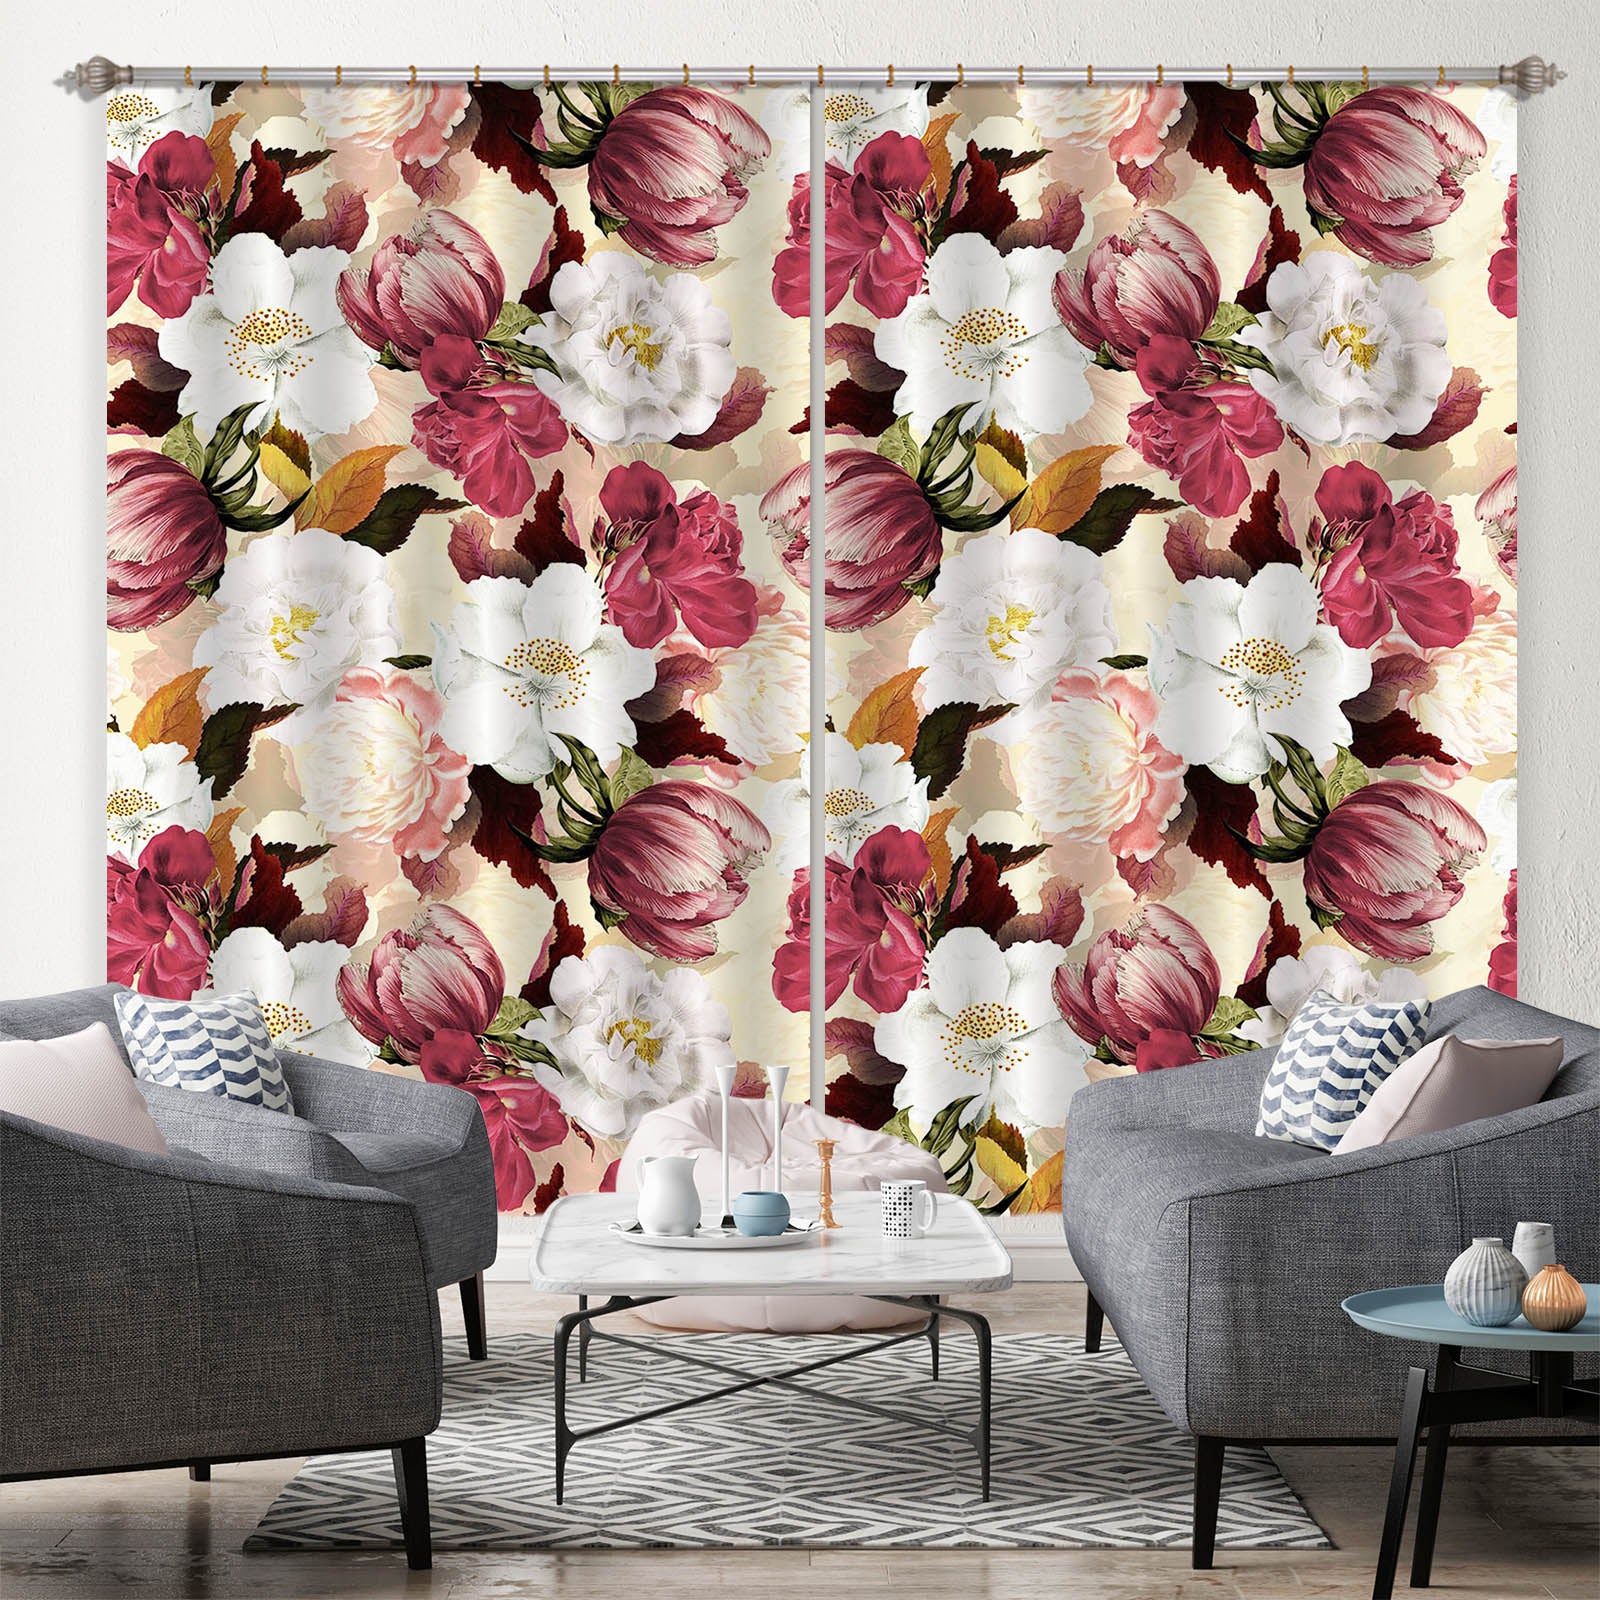 3D Painted Flowers 168 Uta Naumann Curtain Curtains Drapes